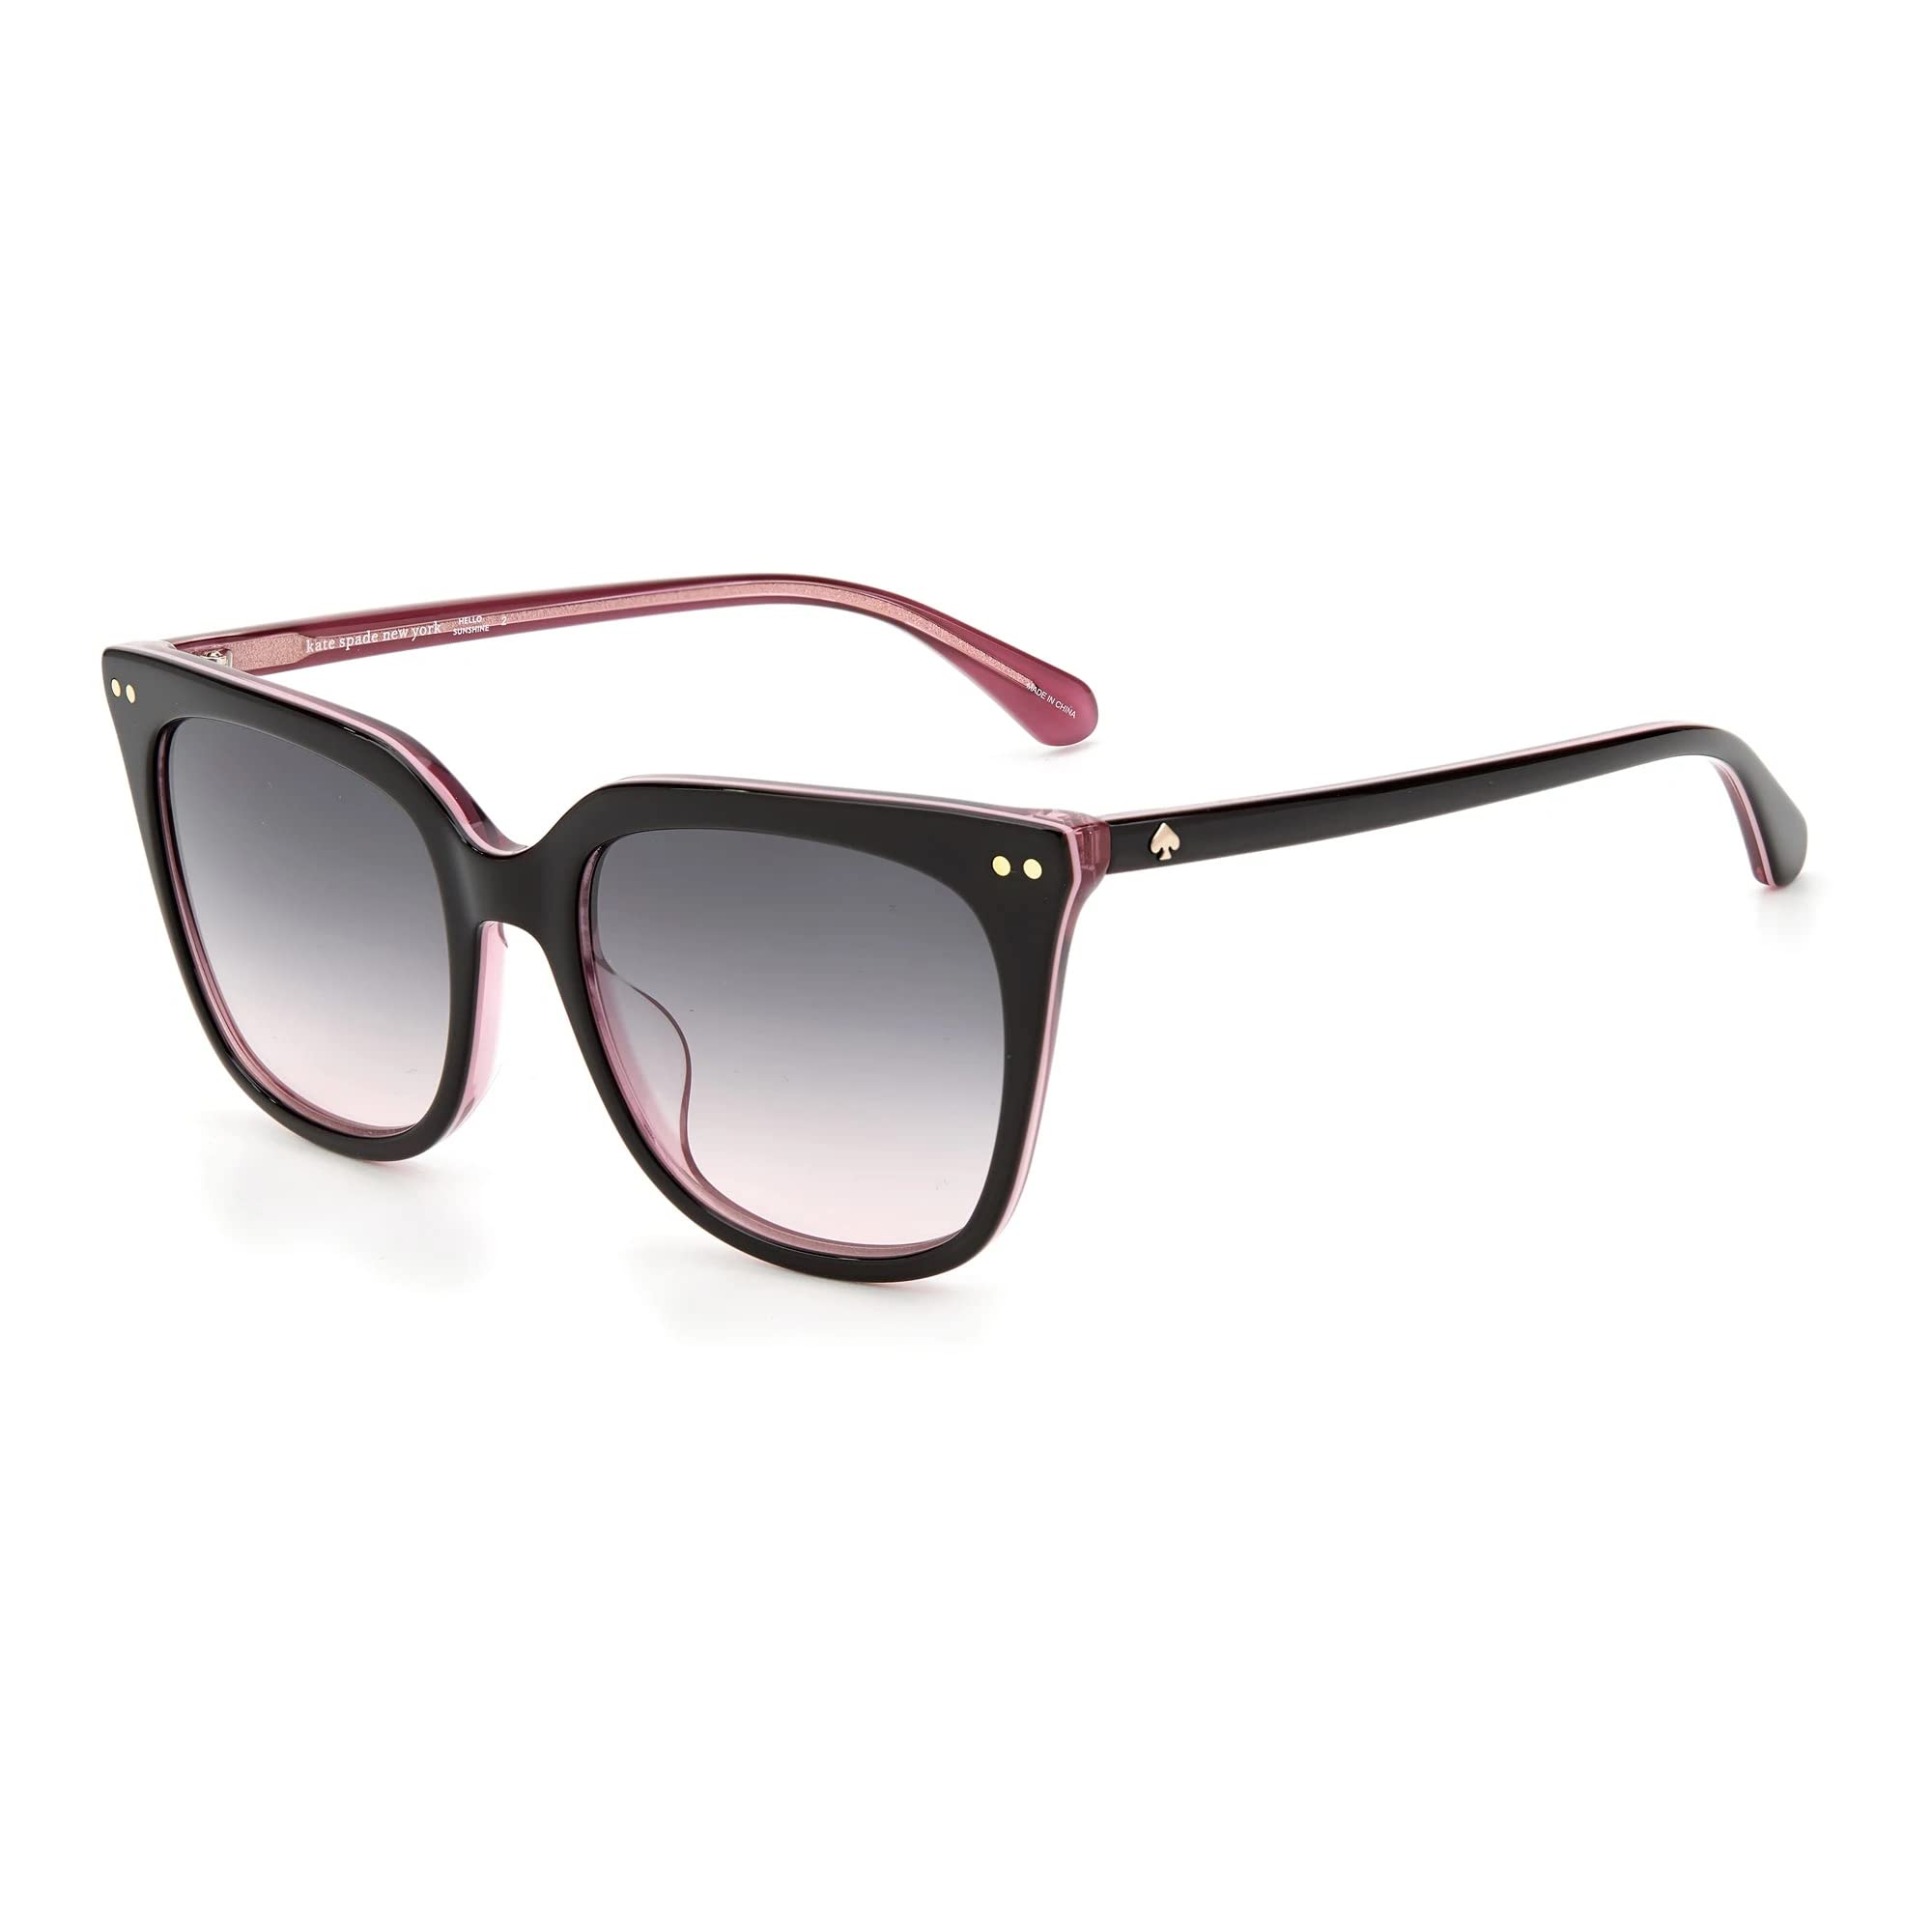 Mua Kate Spade New York Women's Giana/G/S Cat Eye Sunglasses trên Amazon Mỹ  chính hãng 2023 | Giaonhan247